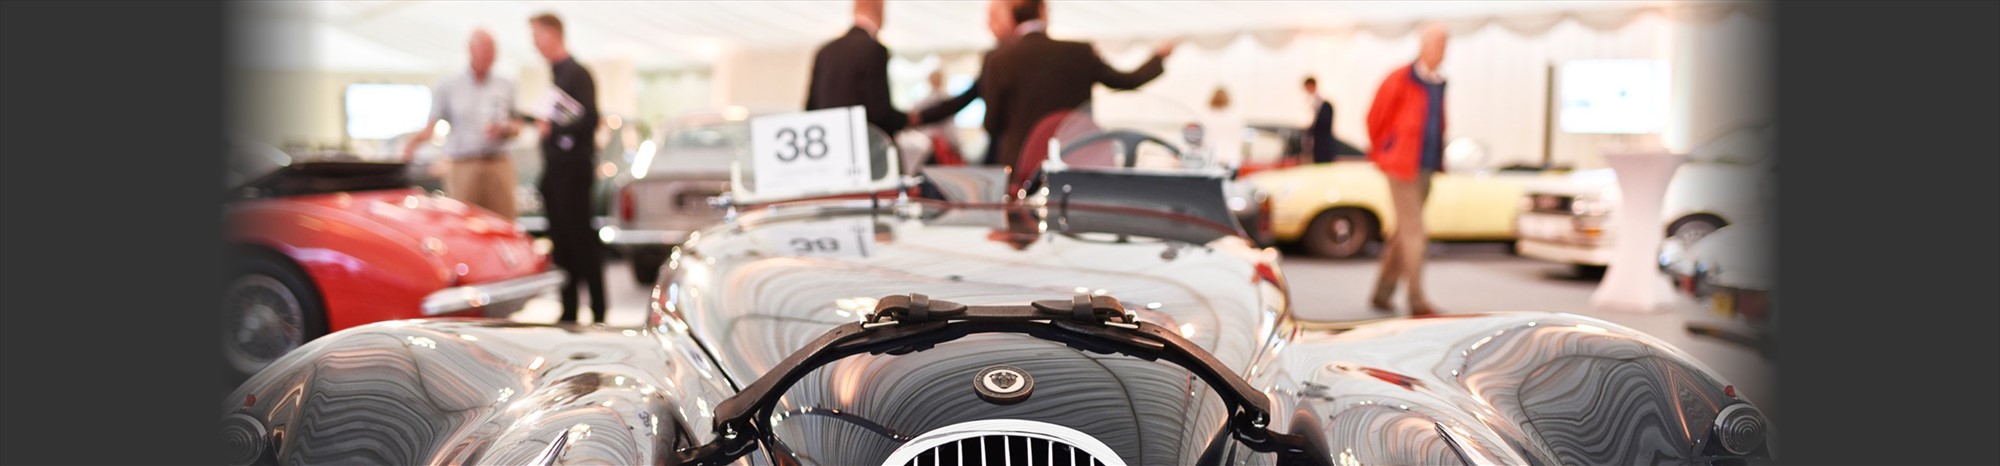 Classic Car Auction Showroom 